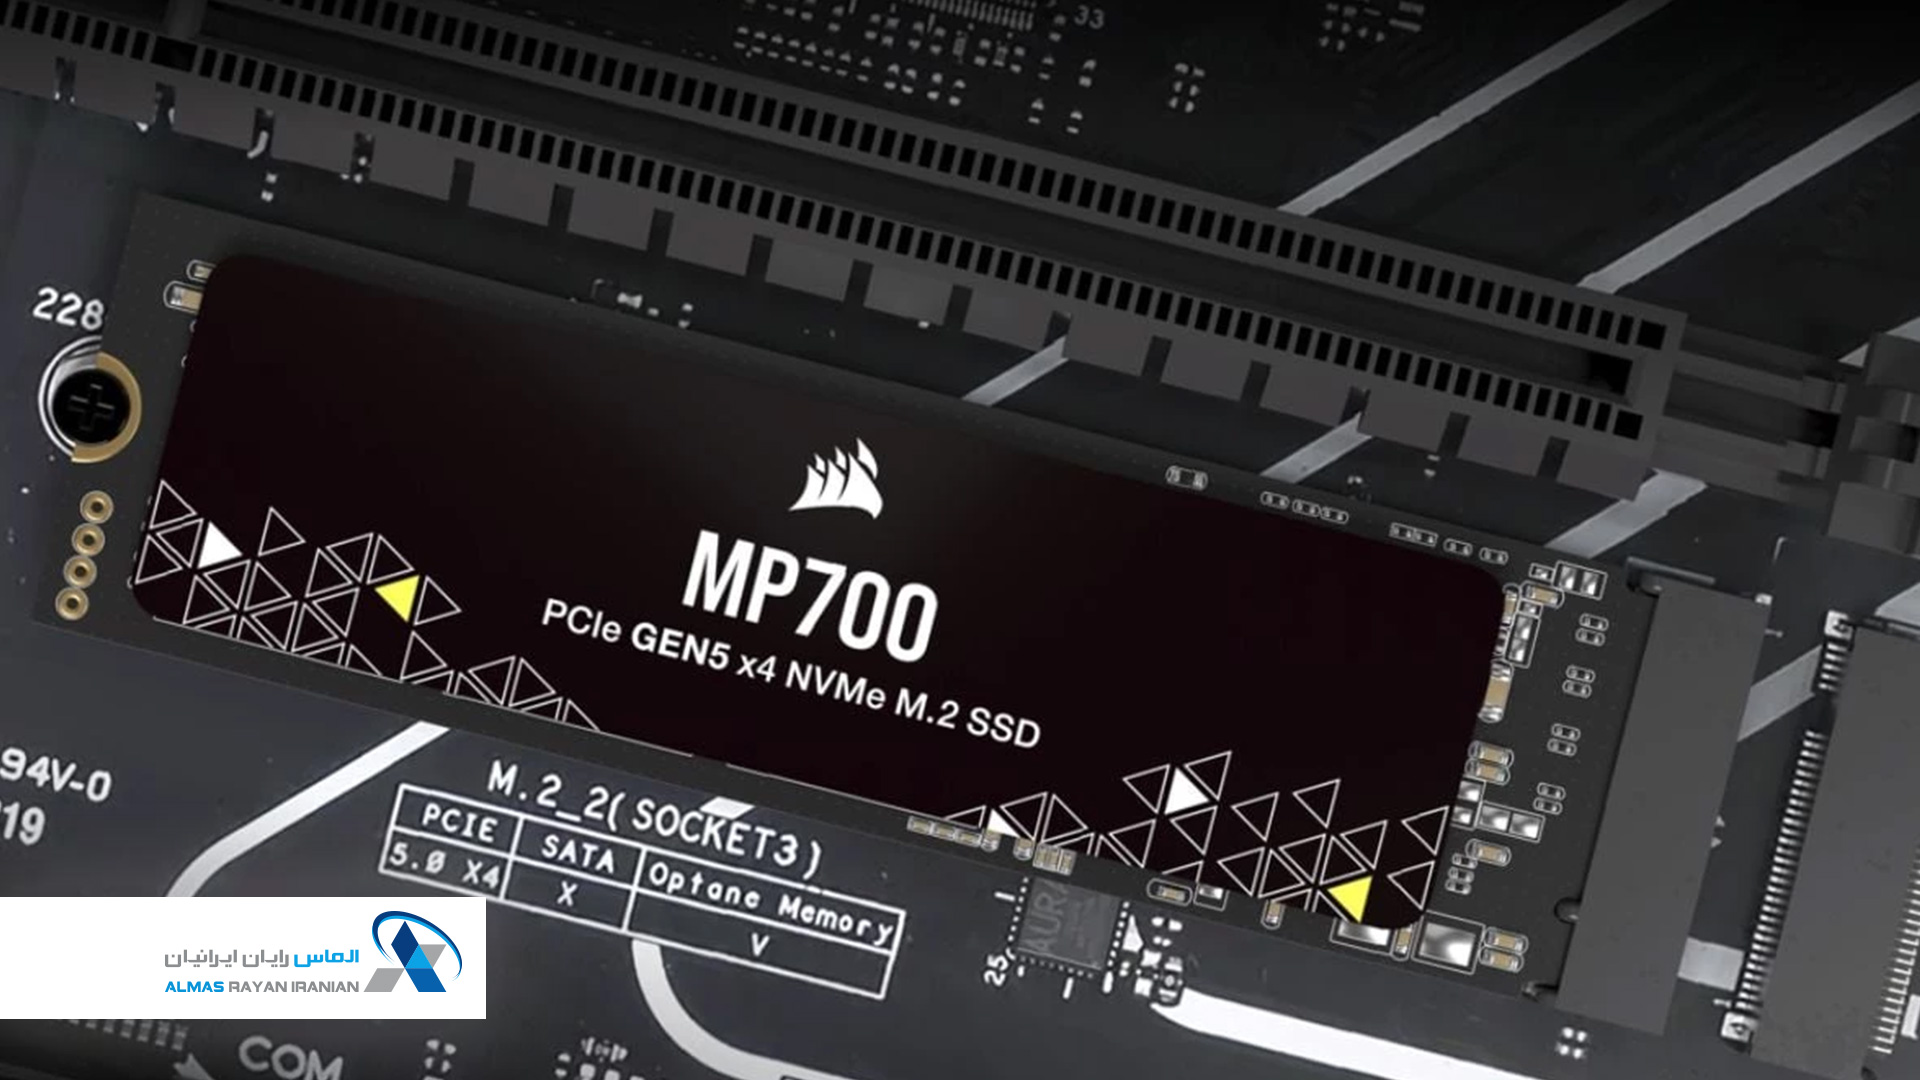 Corsair-MP700-PCIe-Gen-5-M.2-NVMe-SSDs